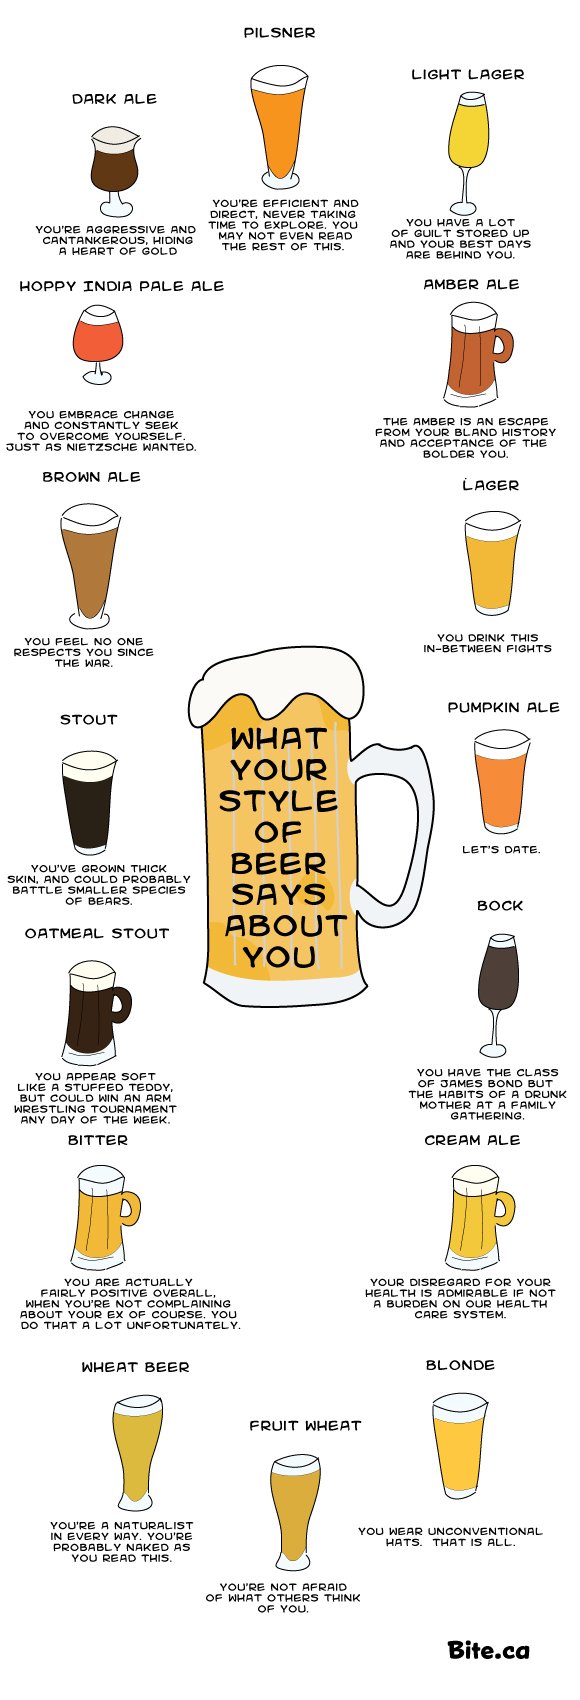 Beer talks.